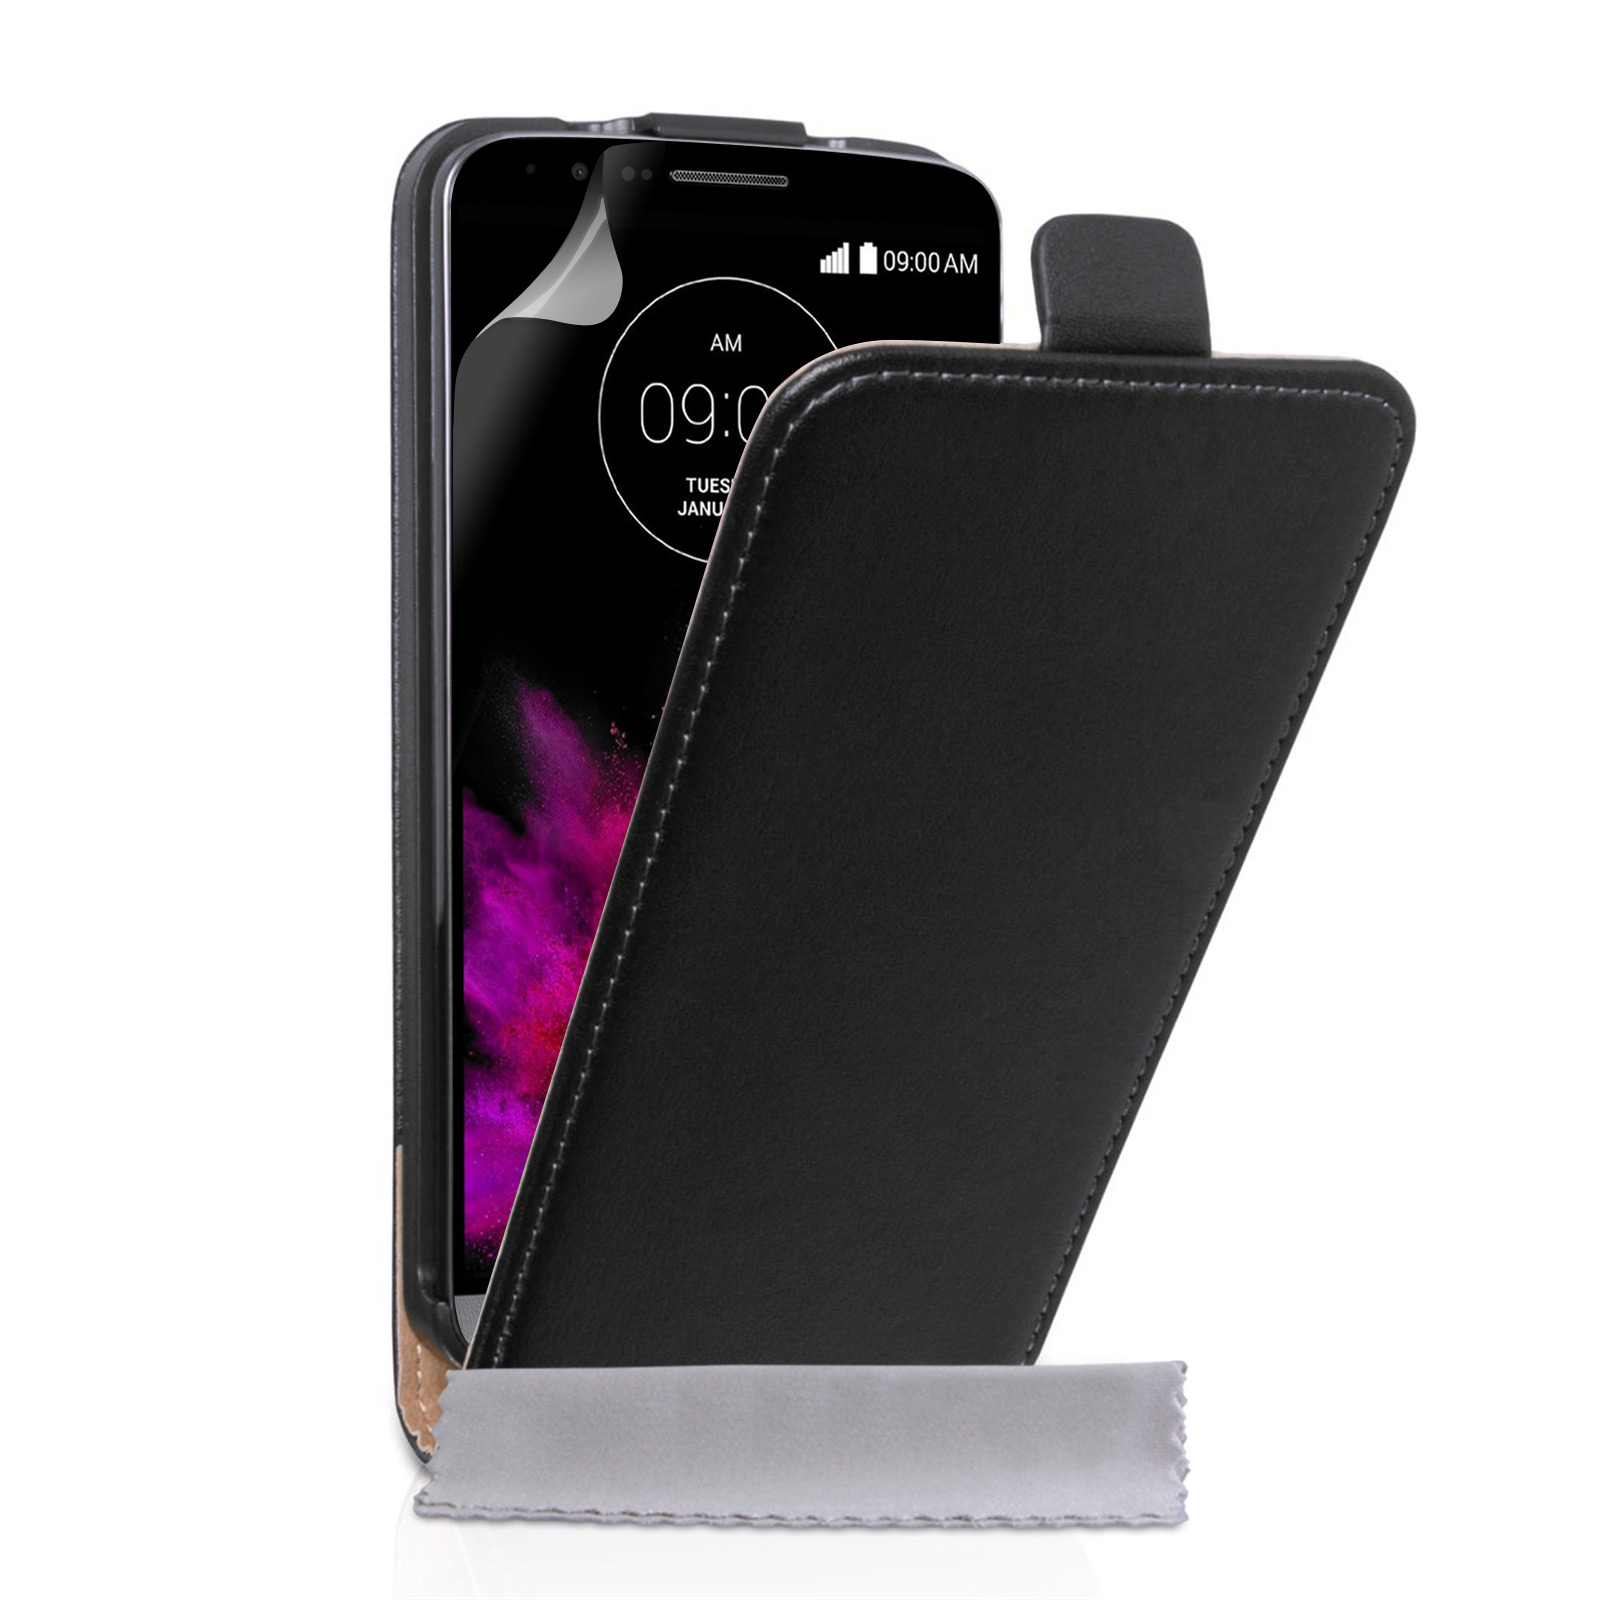 Caseflex LG G4 Real Leather Flip Case - Black